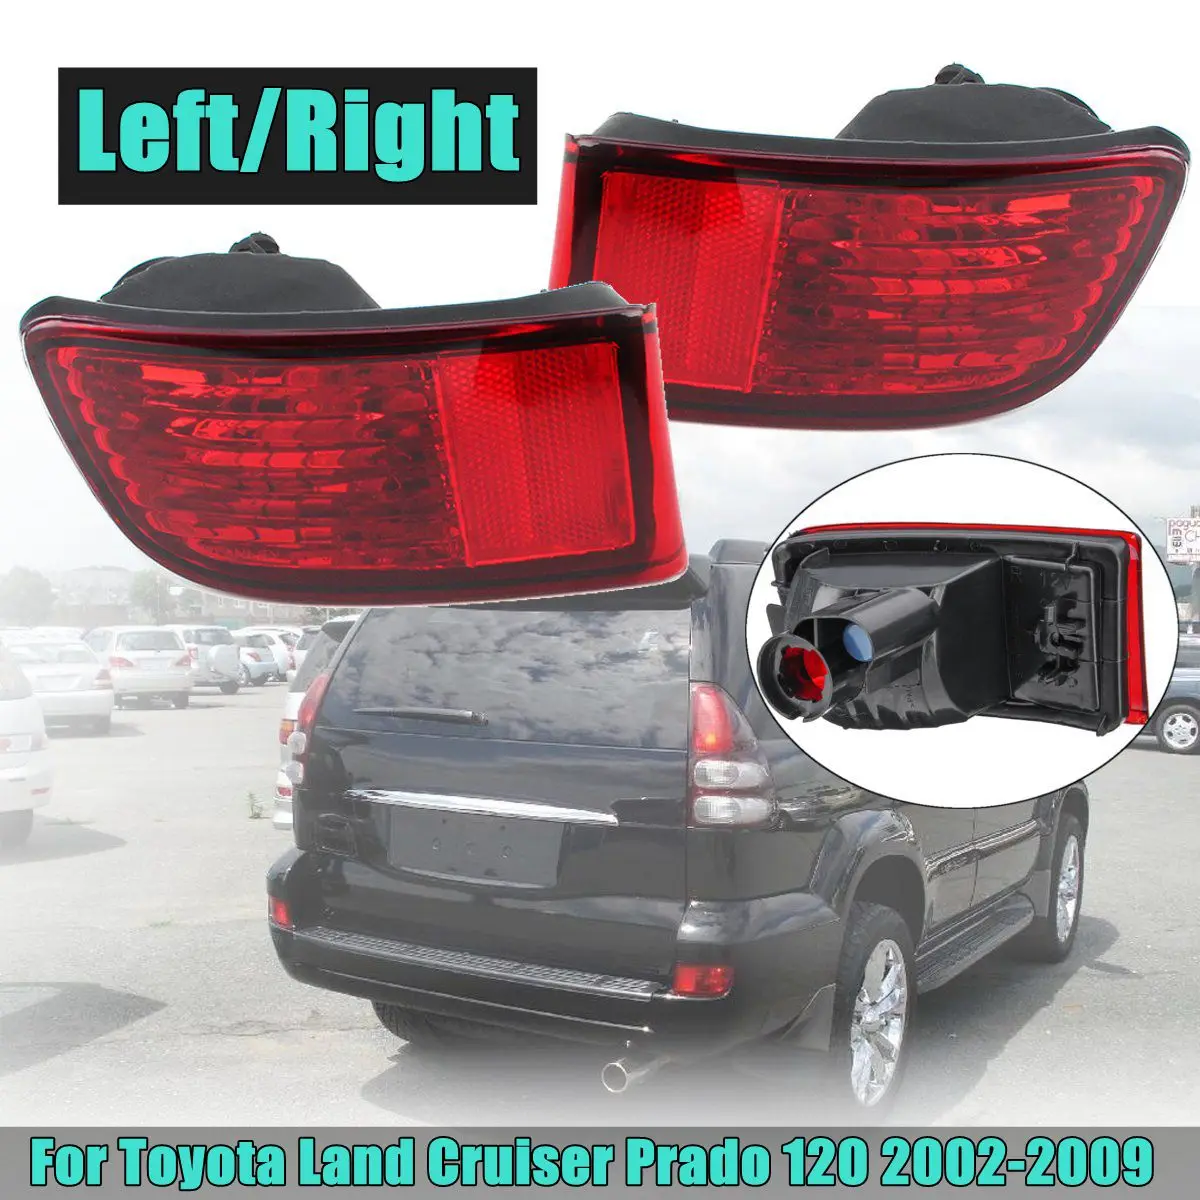 

1 Pair Red Lens Rear Bumper Reflector Tail Fog Light Housing Case for Toyota Land Cruiser Prado 120 2002 03 04 05 06 07 08 2009